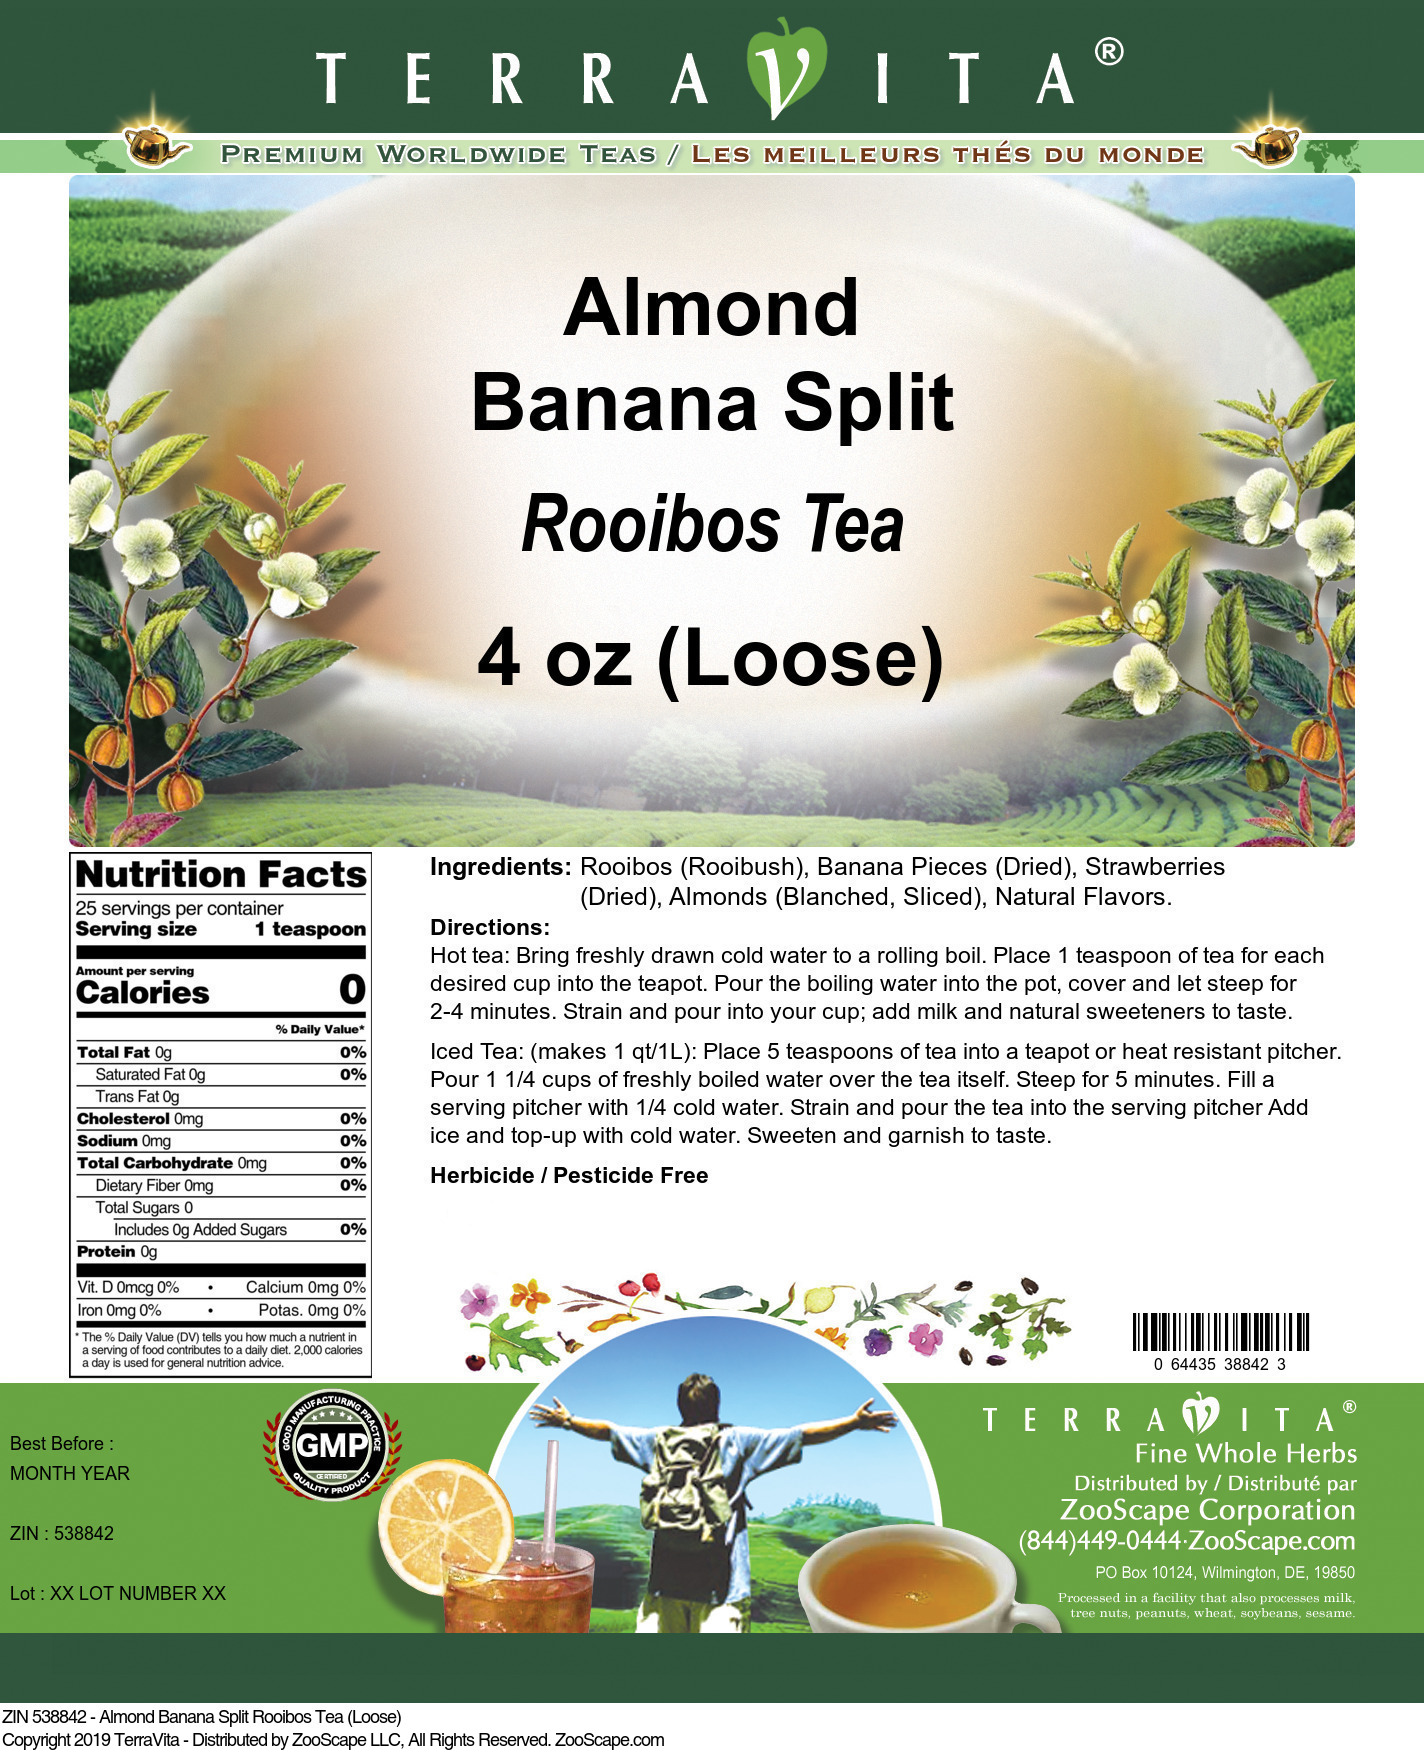 Almond Banana Split Rooibos Tea (Loose) - Label